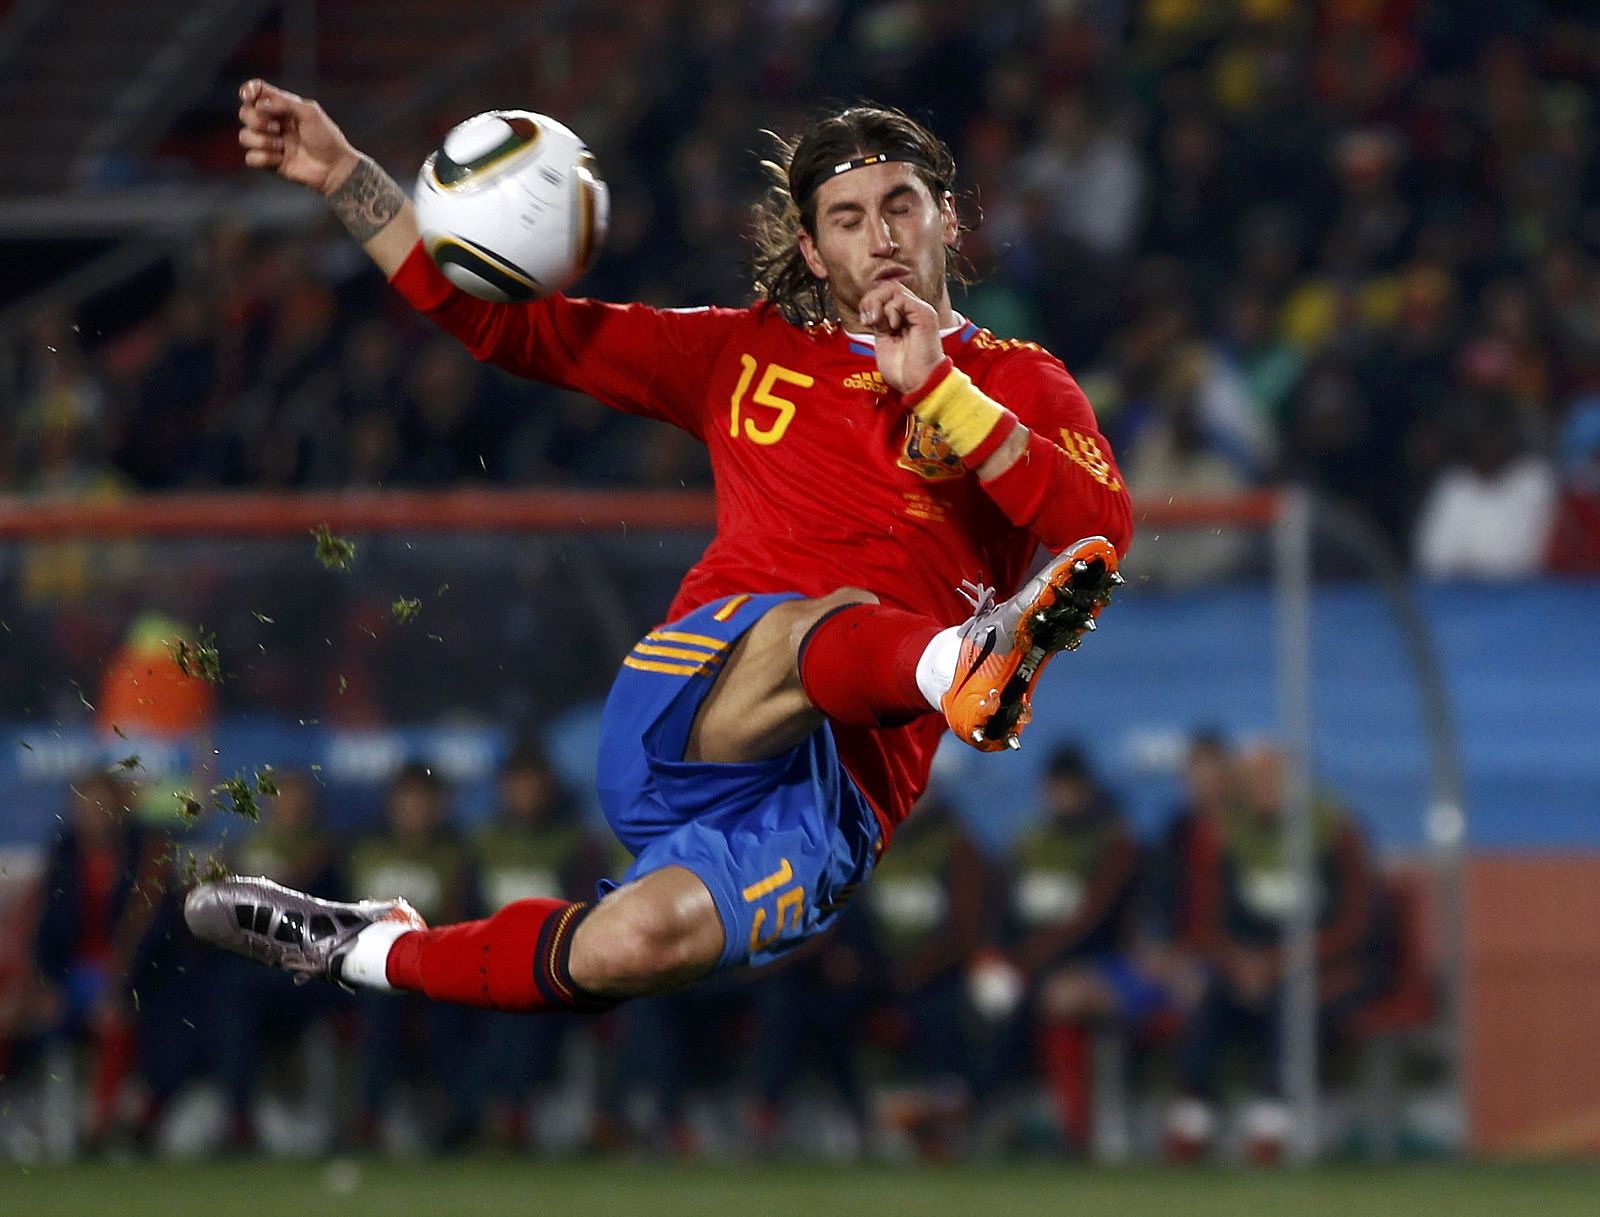 Spain's Ramos kicks the ball during a 2010 World Cup Group H match against Honduras at Ellis Park stadium in Johannesburg